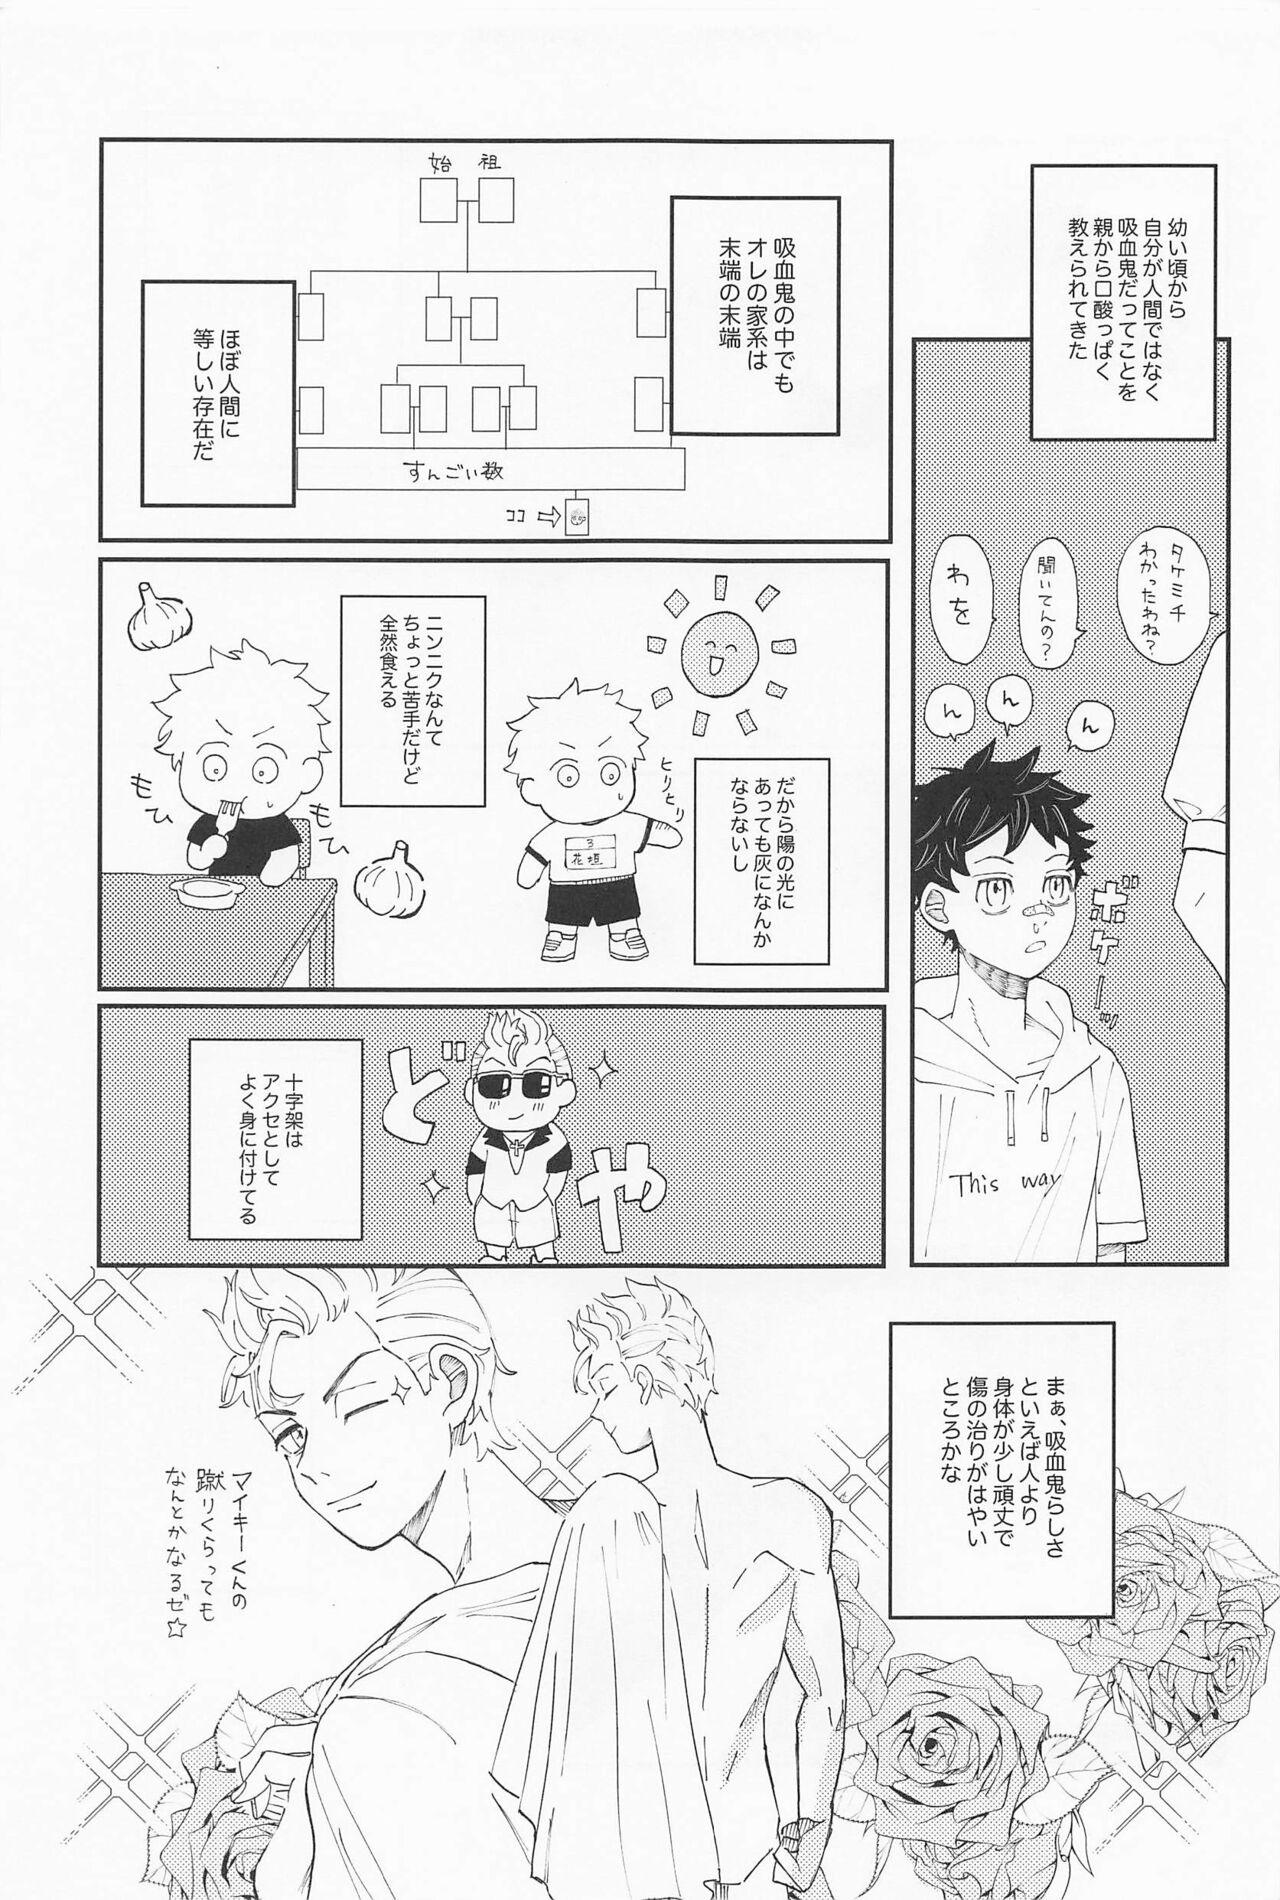 Mask kiminoseidebagurimakuri - Tokyo revengers Lover - Page 6